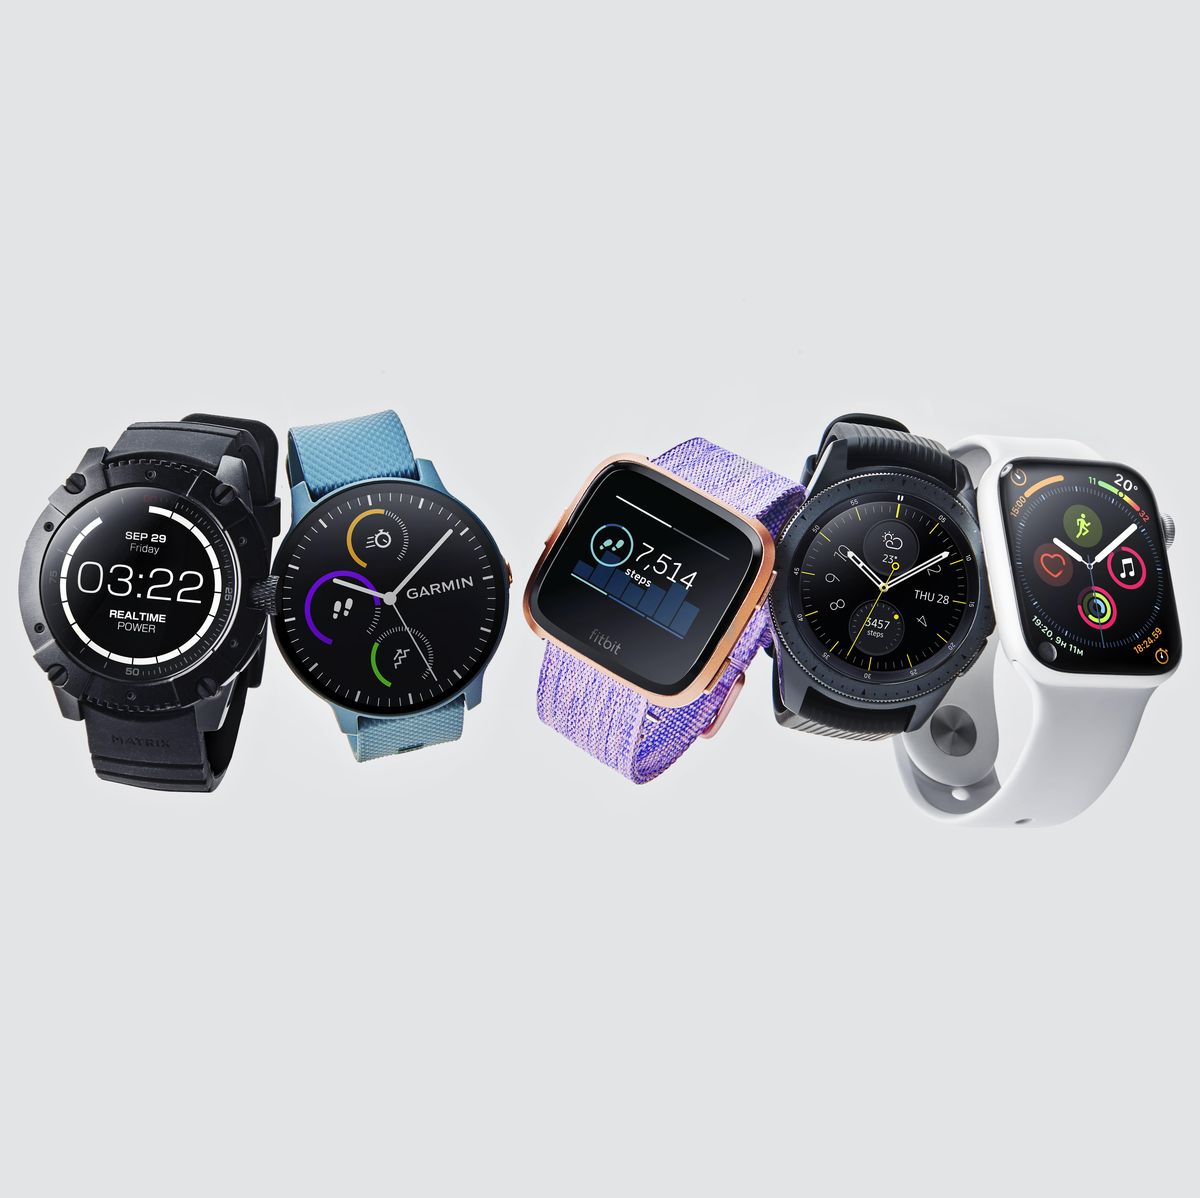 5 Best Smartwatches 2020: Smartwatches for Men